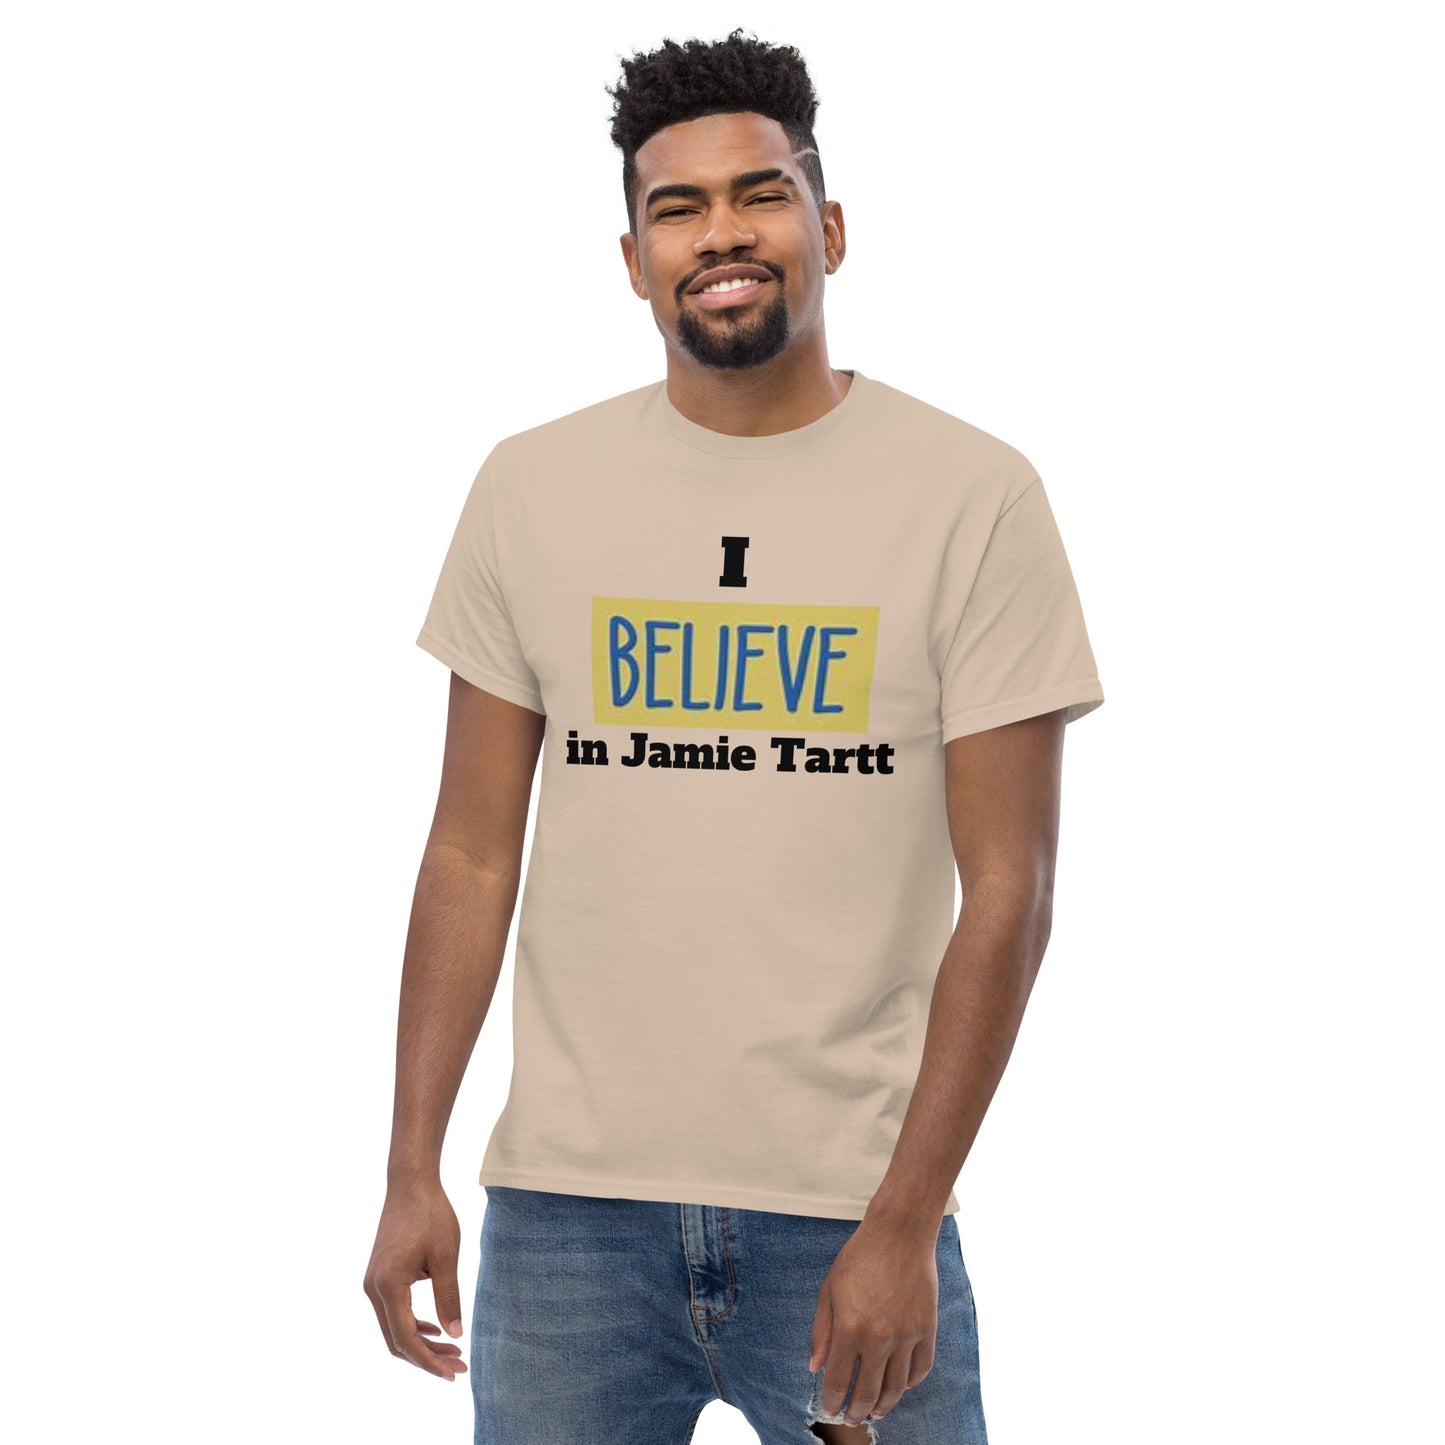 I Believe in Jamie Tartt T-Shirt